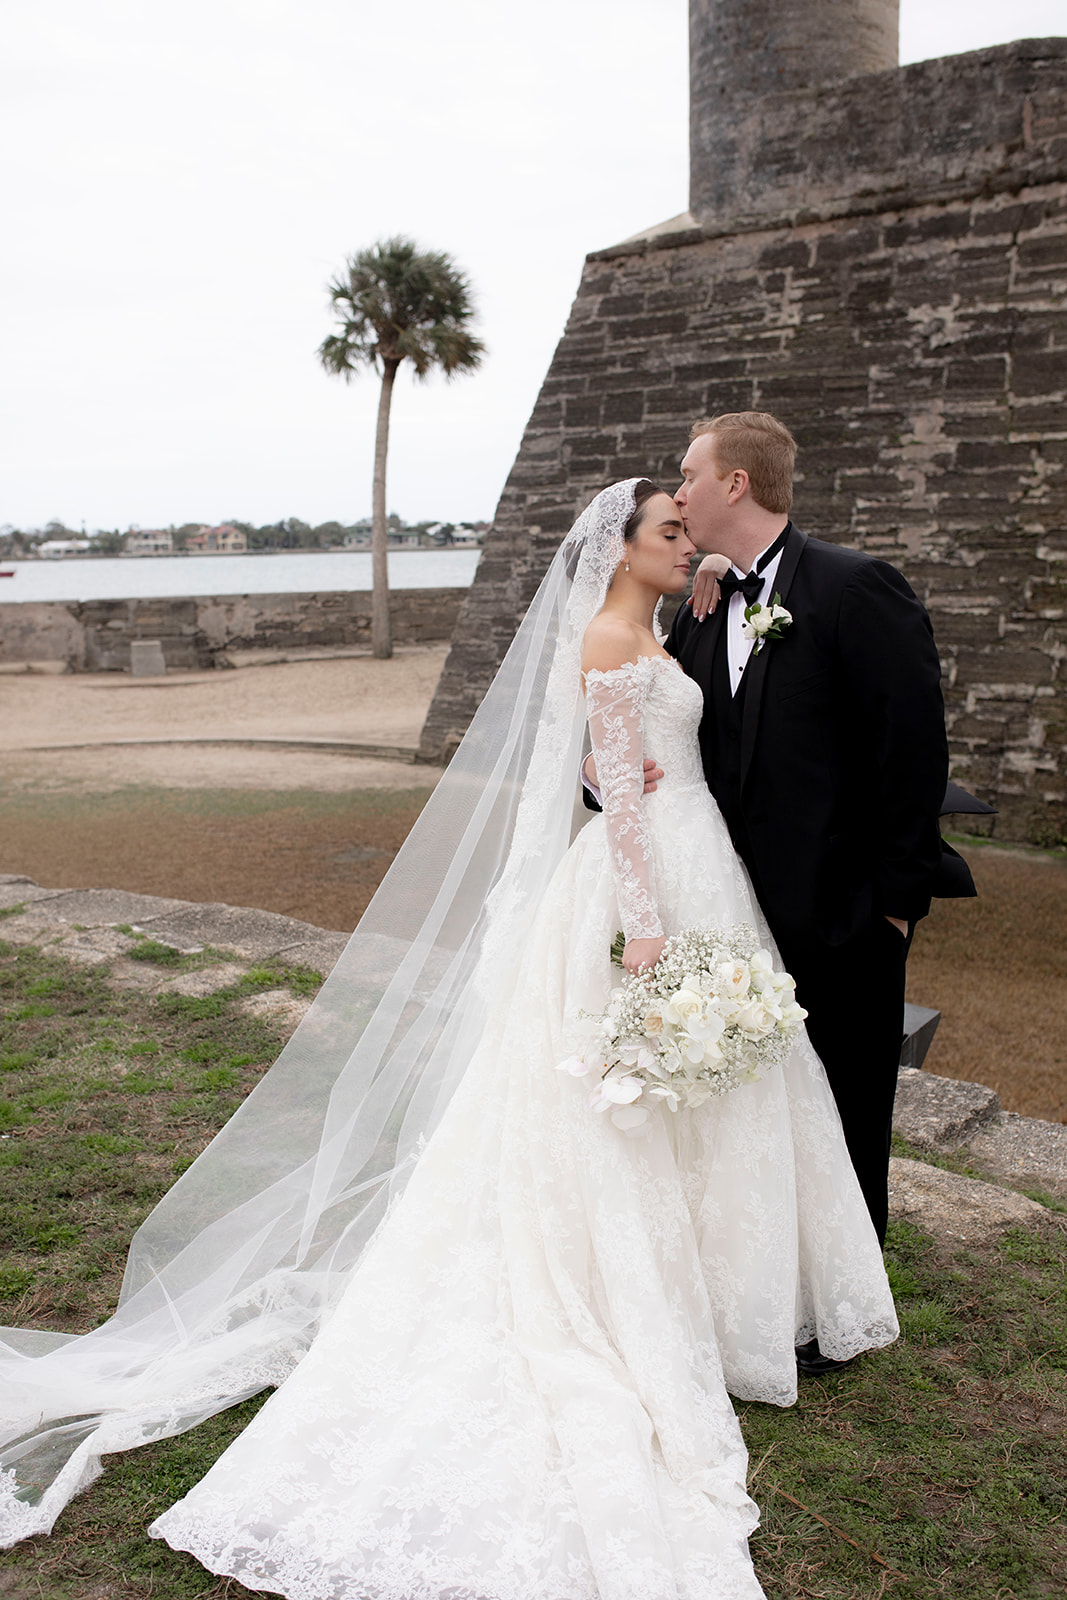 Wedding at Lightner Museum in St. Augustine FL